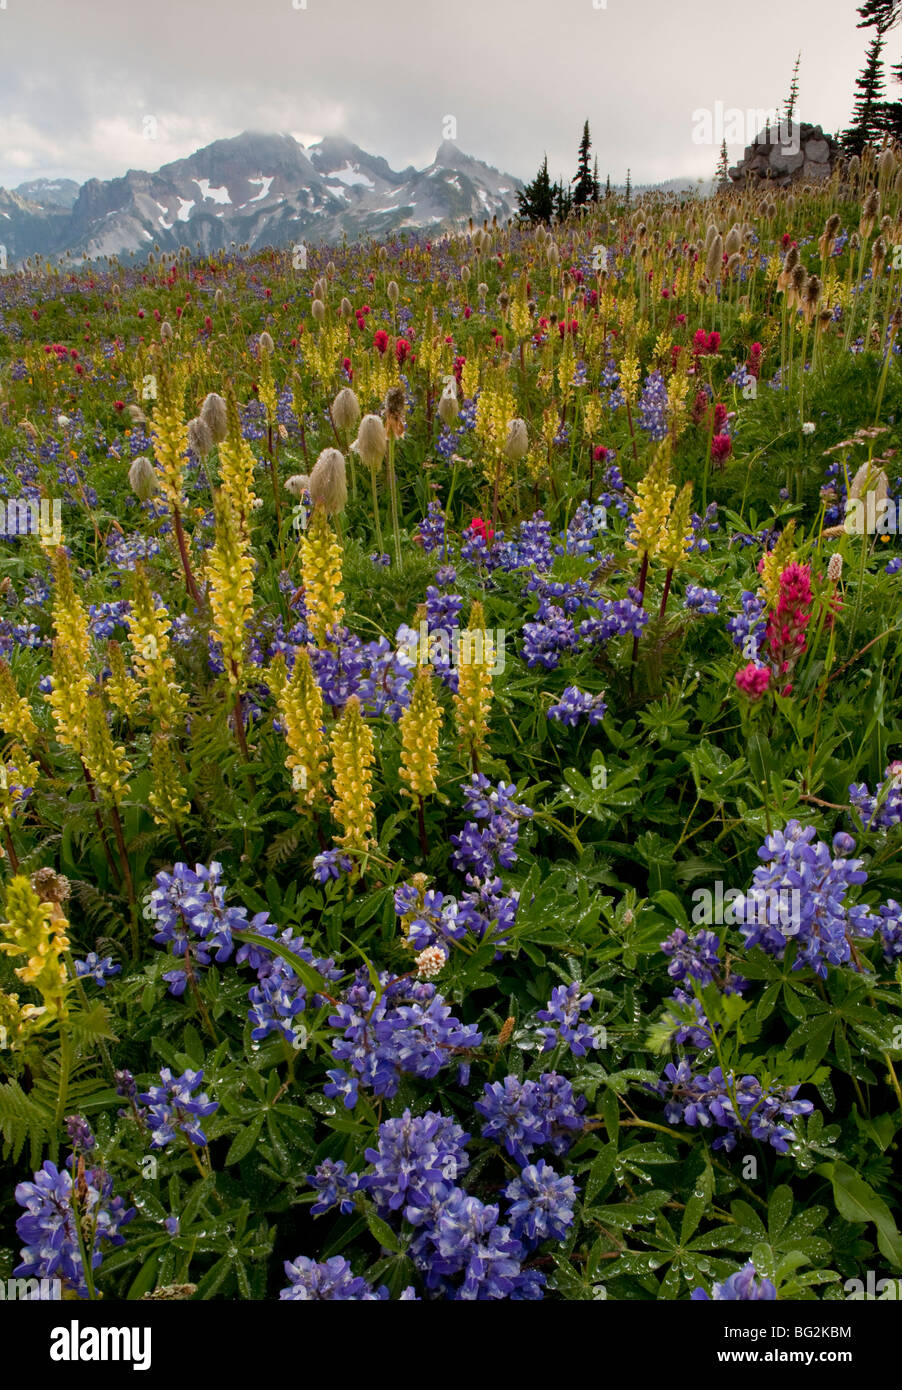 Spectacular summer alpine flowers including Bracted Lousewort Pedicularis bracteosa, Paintbrush, Lupines, Mount Rainier Stock Photo